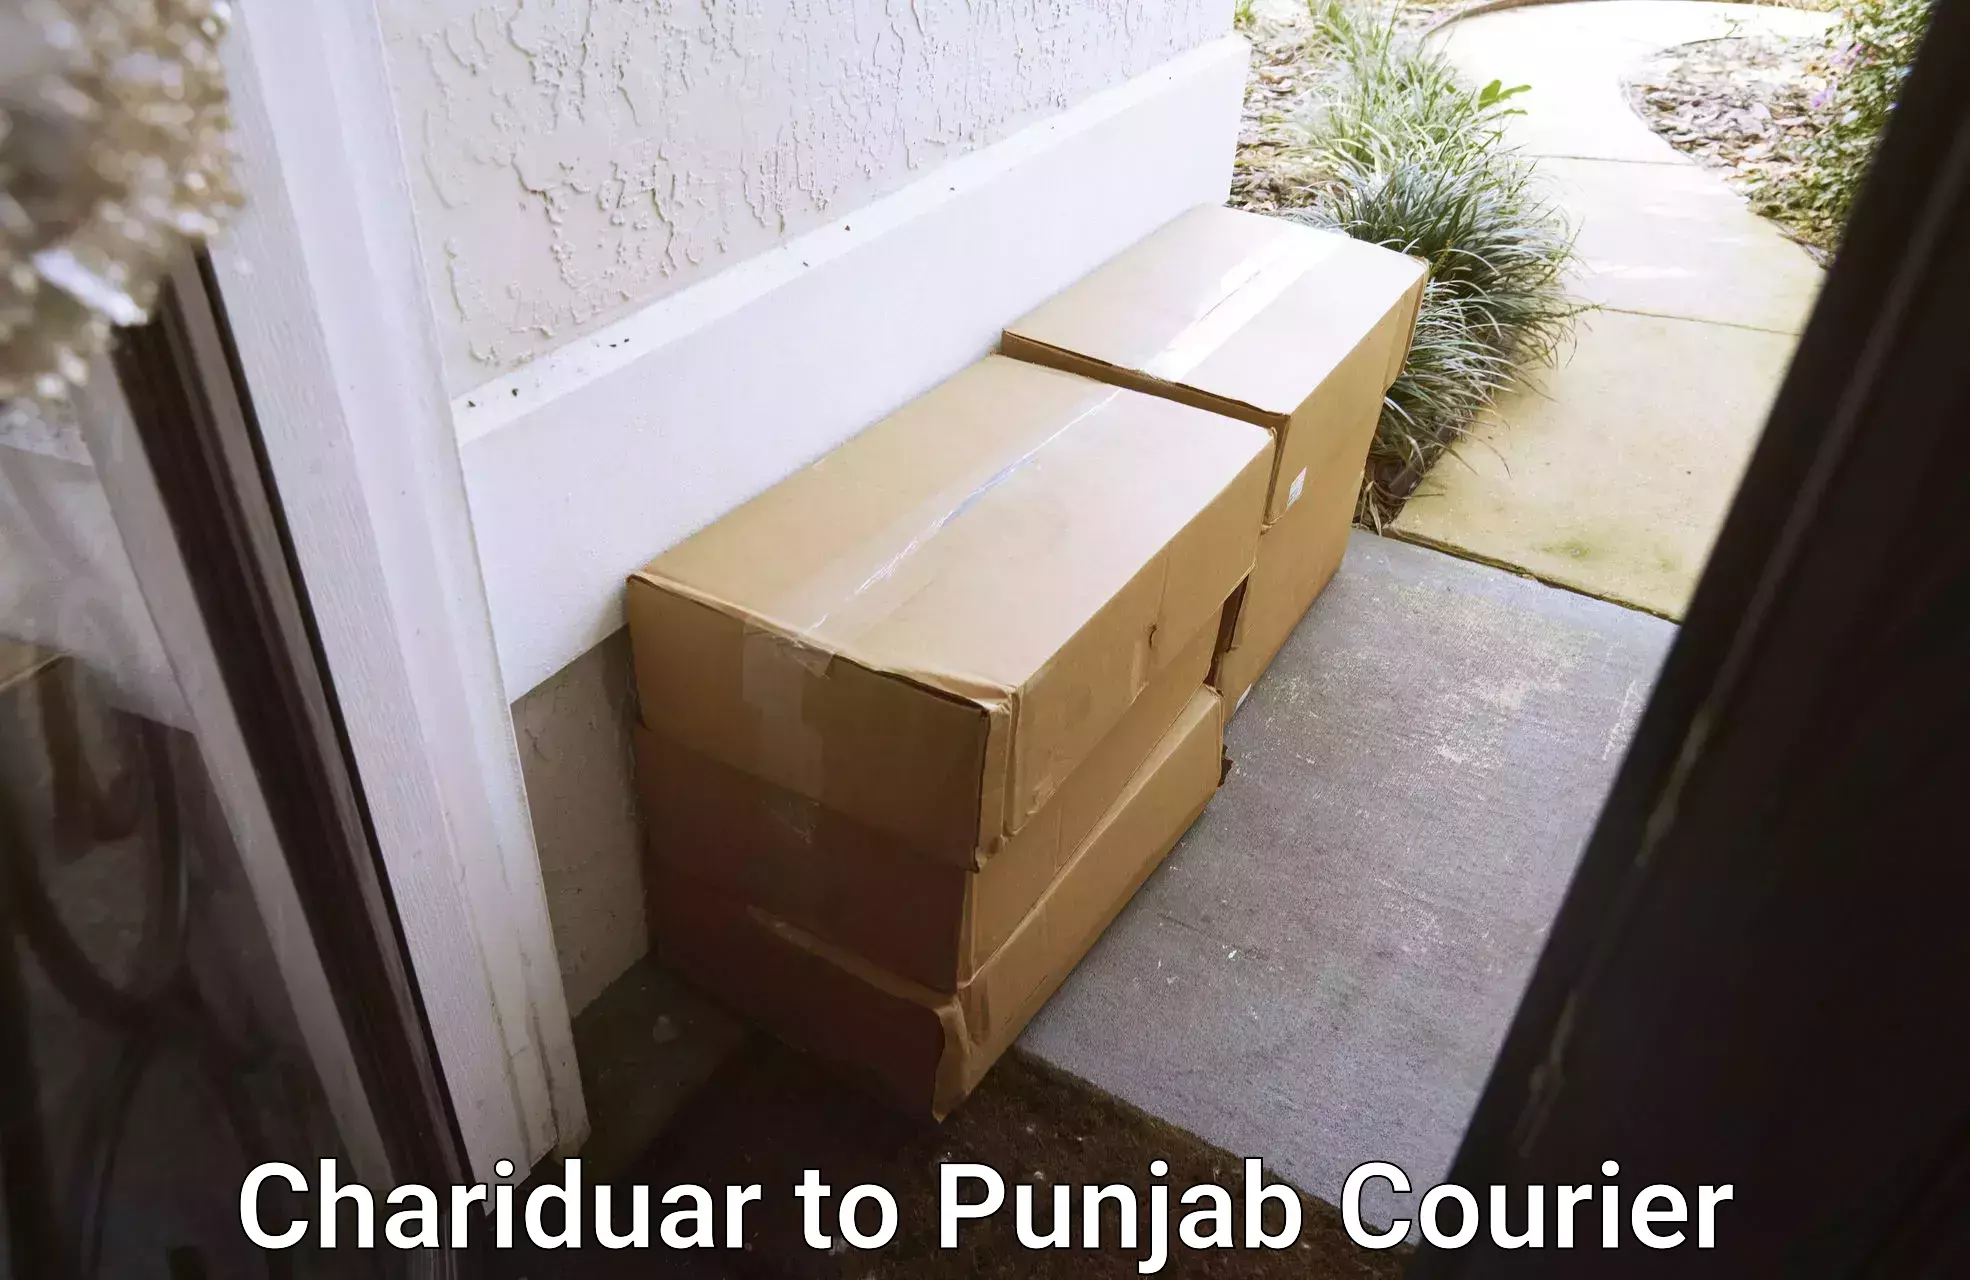 Nationwide courier service Chariduar to Punjab